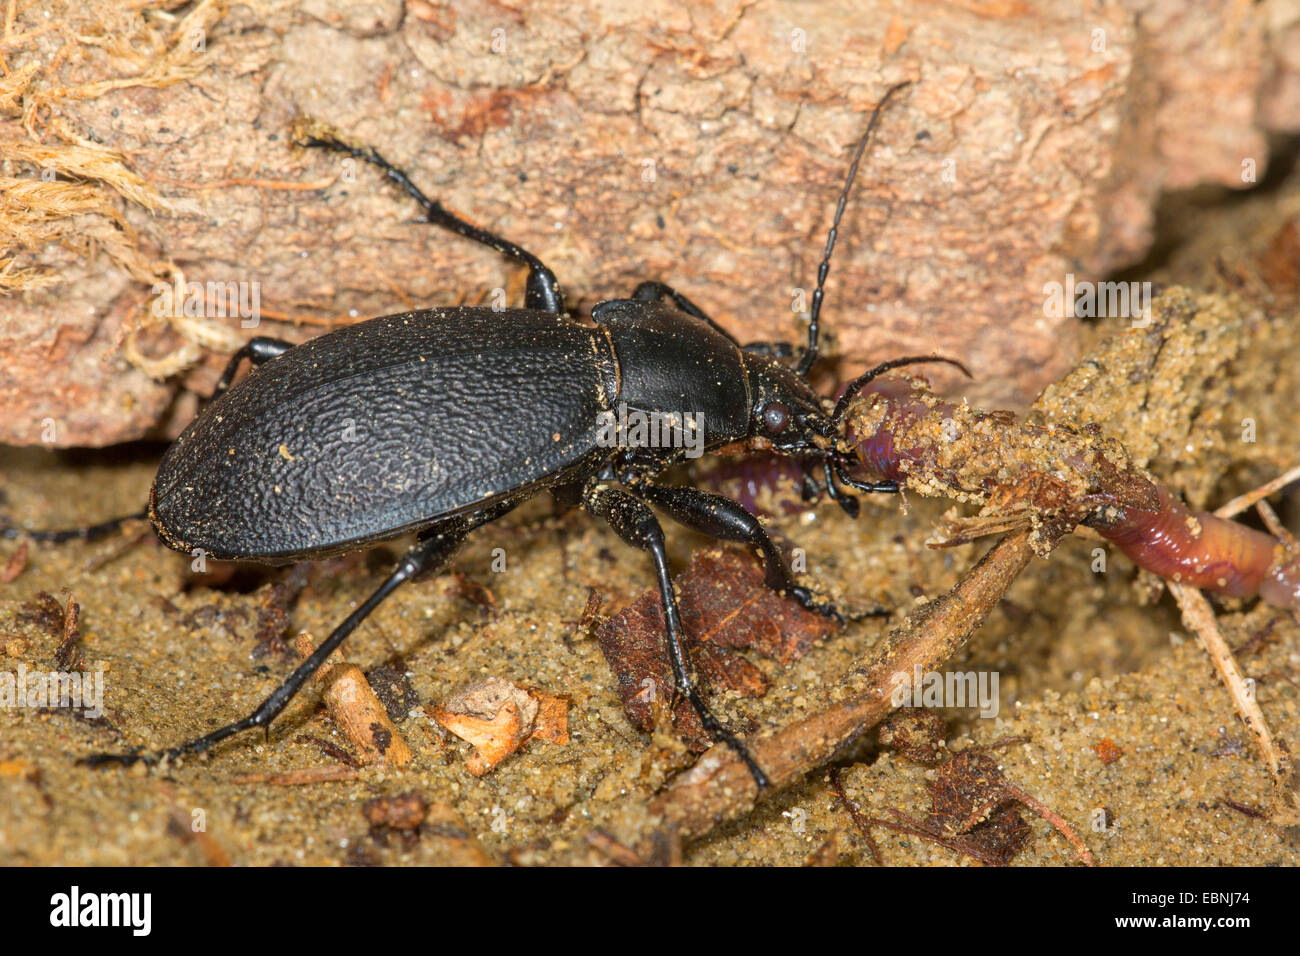 leatherback ground beetle (Carabus coriaceus), feeding worm, Germany Stock Photo